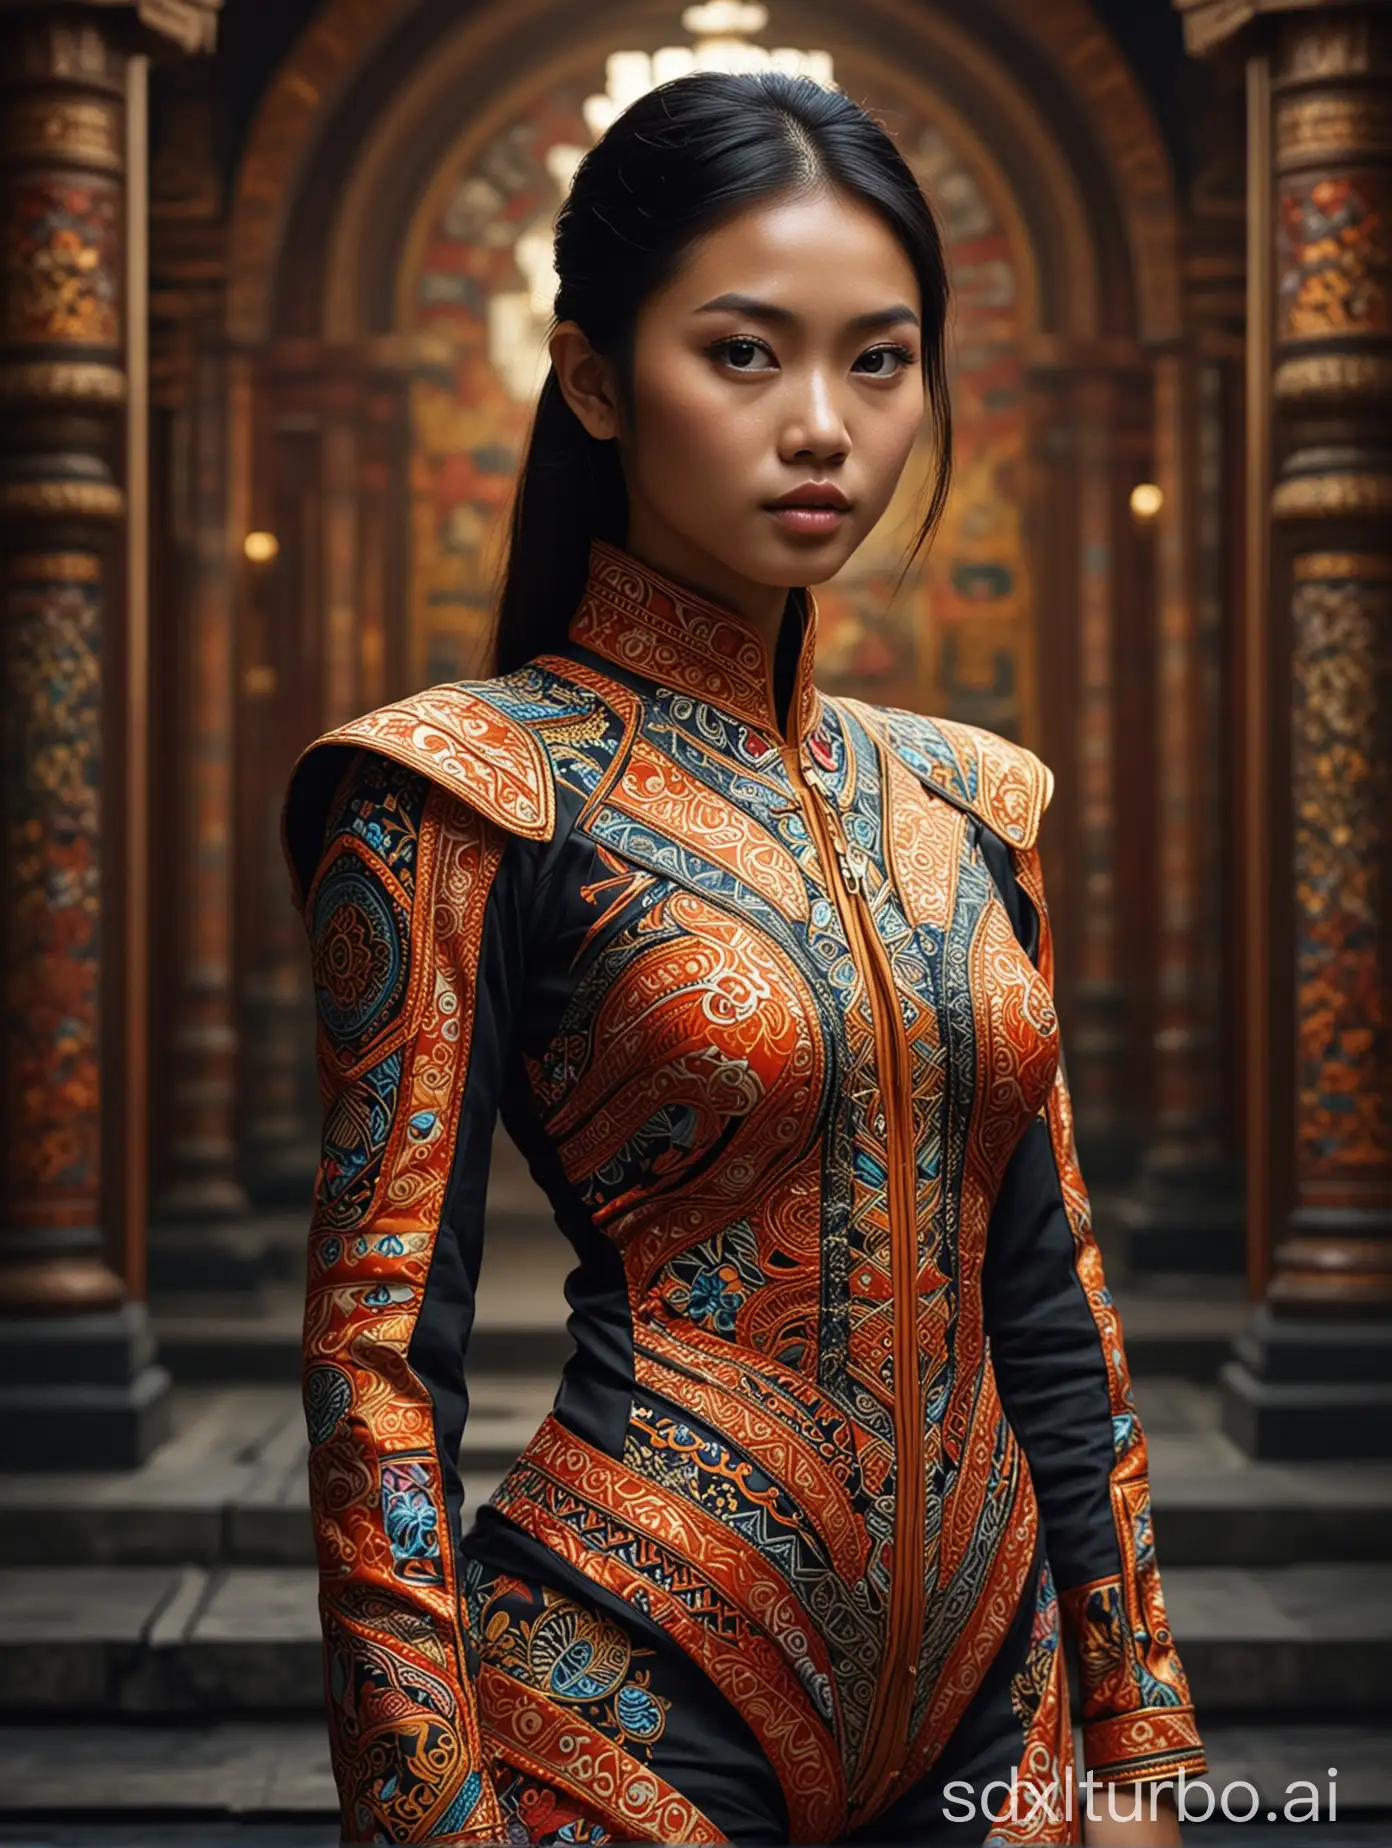 Indonesian-Futuristic-Fashion-Vibrant-Fusion-Suit-Worn-by-Confident-Girl